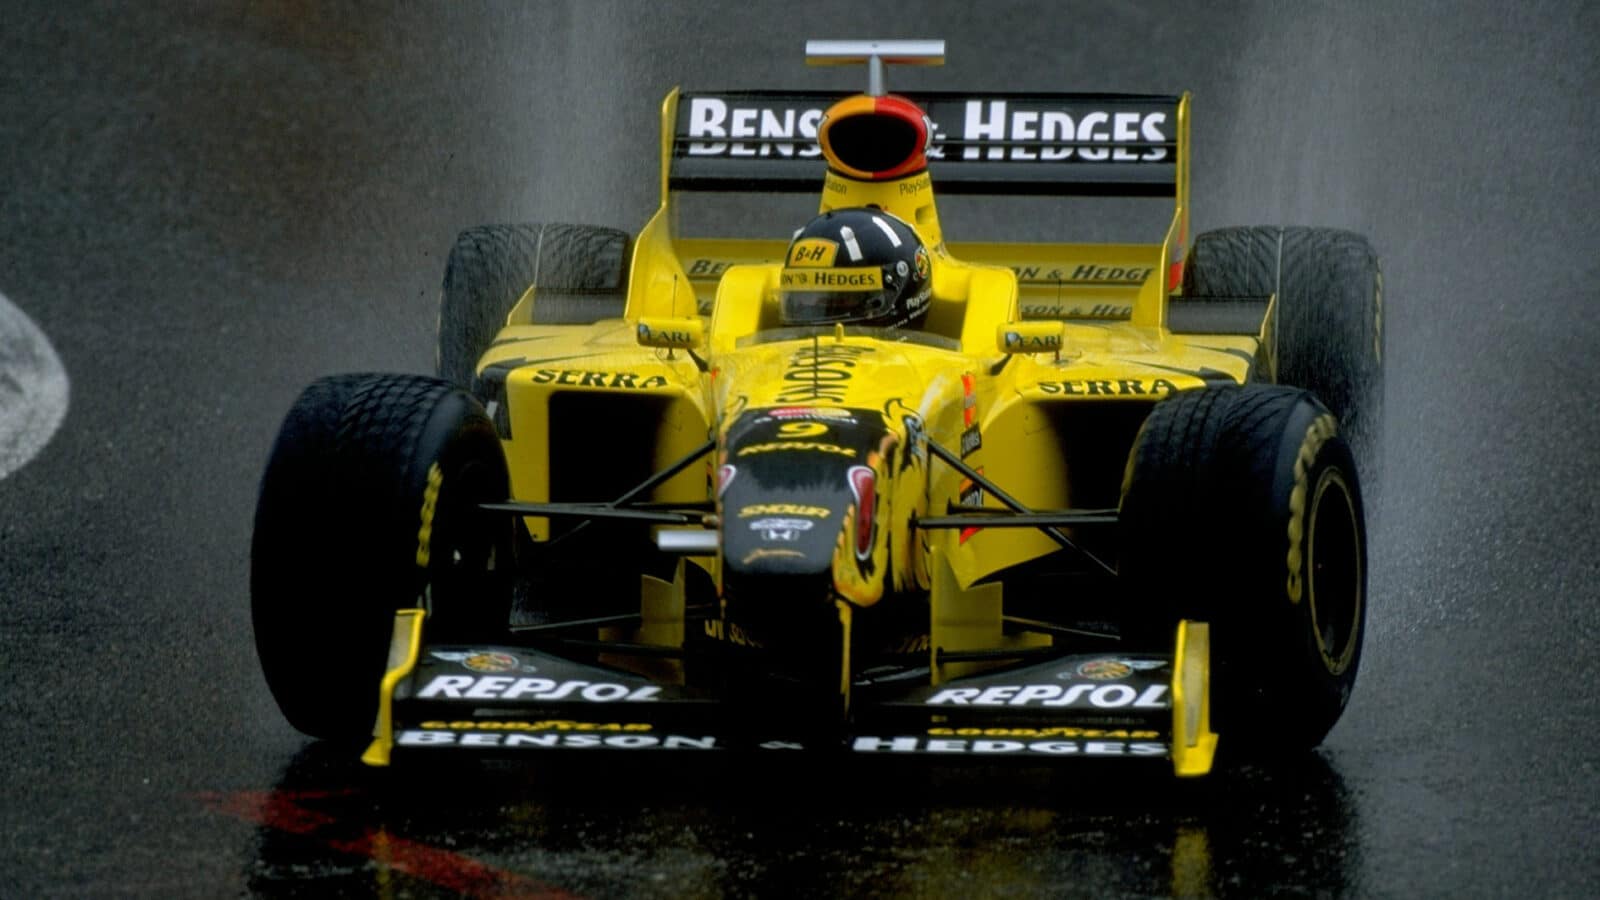 Jordan 198 of Damon Hill in 1998 Belgian Grand Prix